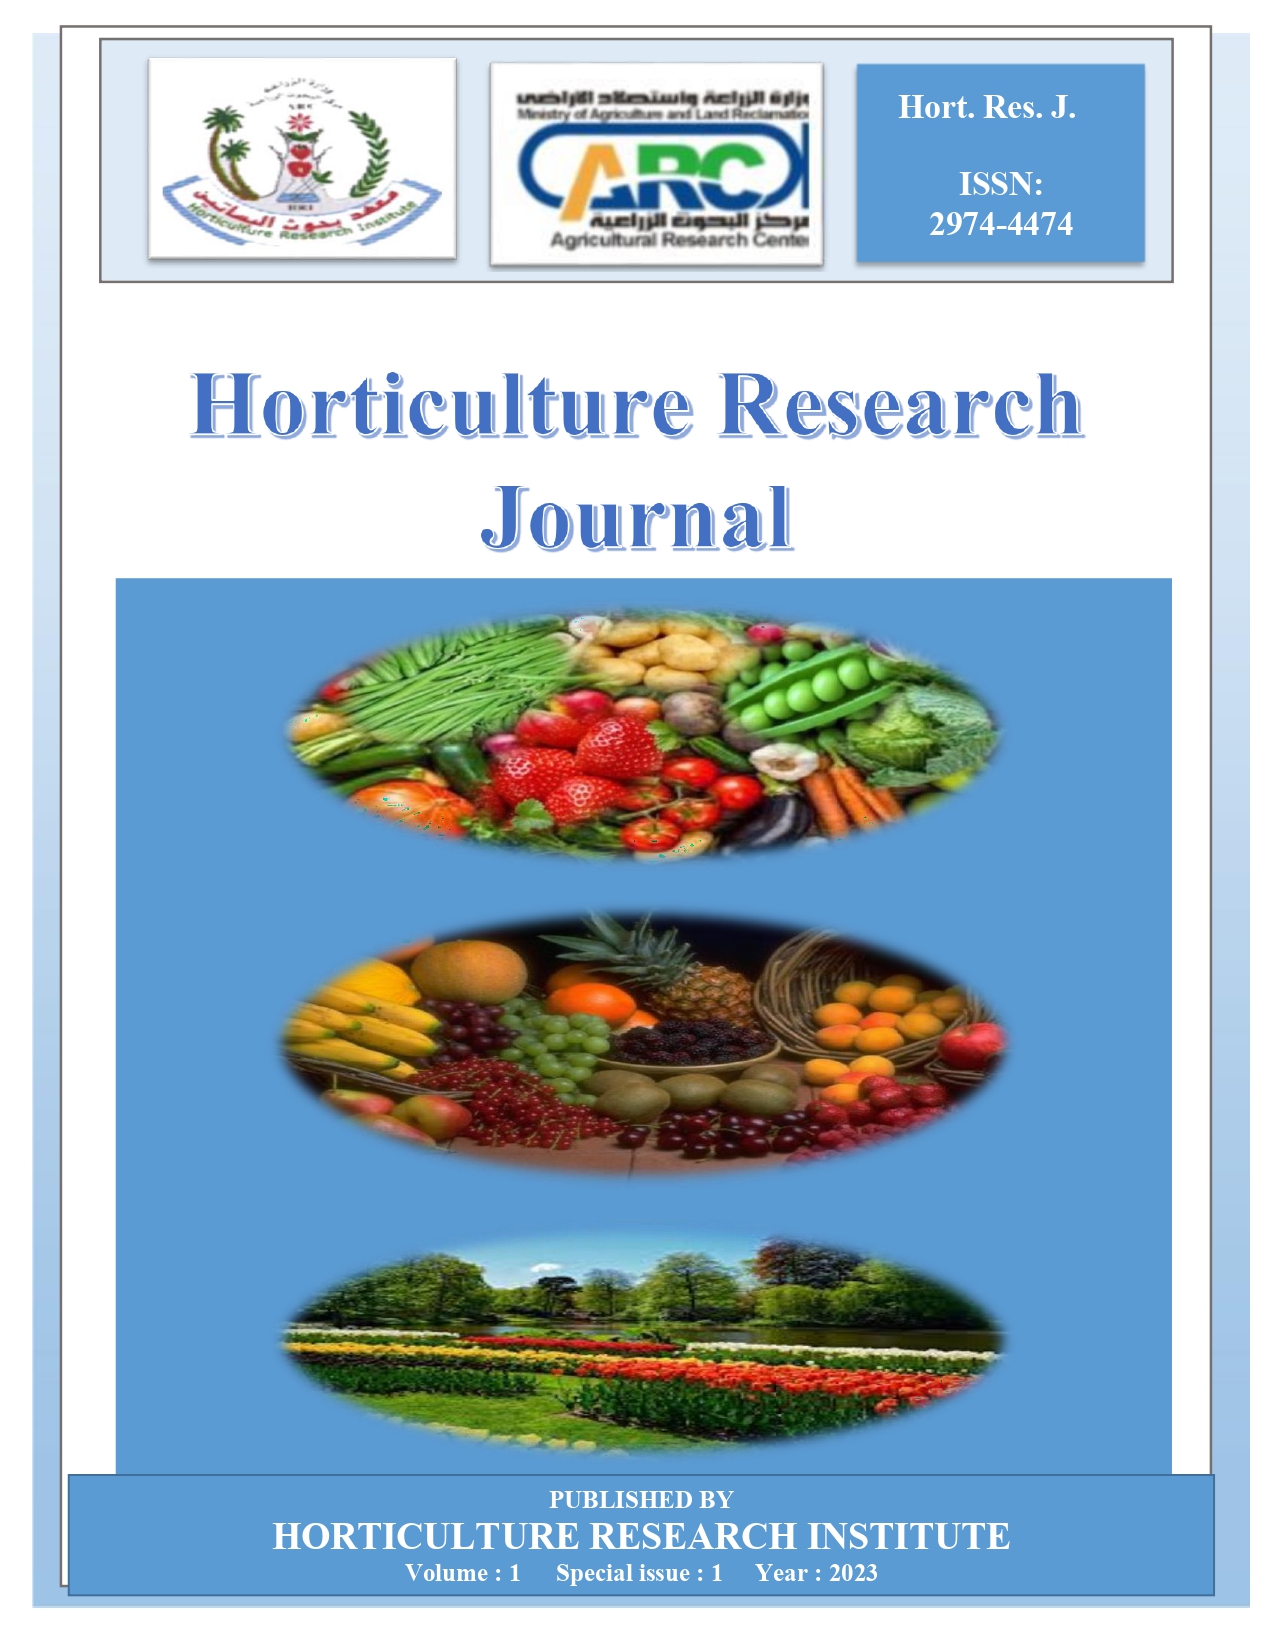 horticulture topics research paper